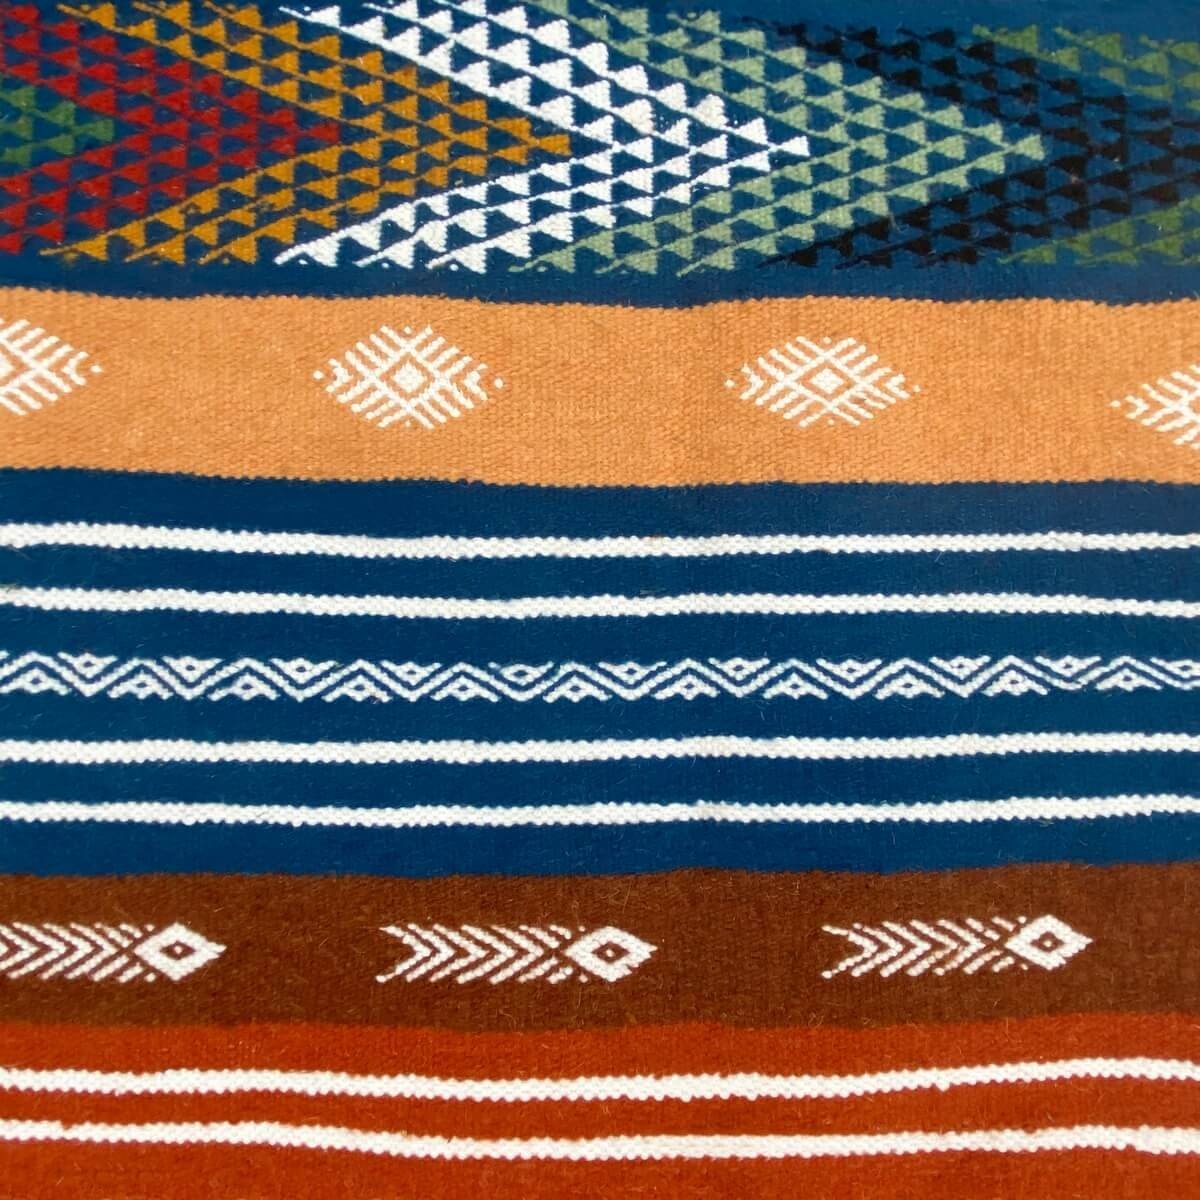 Berber tapijt Tapijt Kilim Anella 95x140 Veelkleurig (Handgeweven, Wol, Tunesië) Tunesisch kilimdeken, Marokkaanse stijl. Rechth